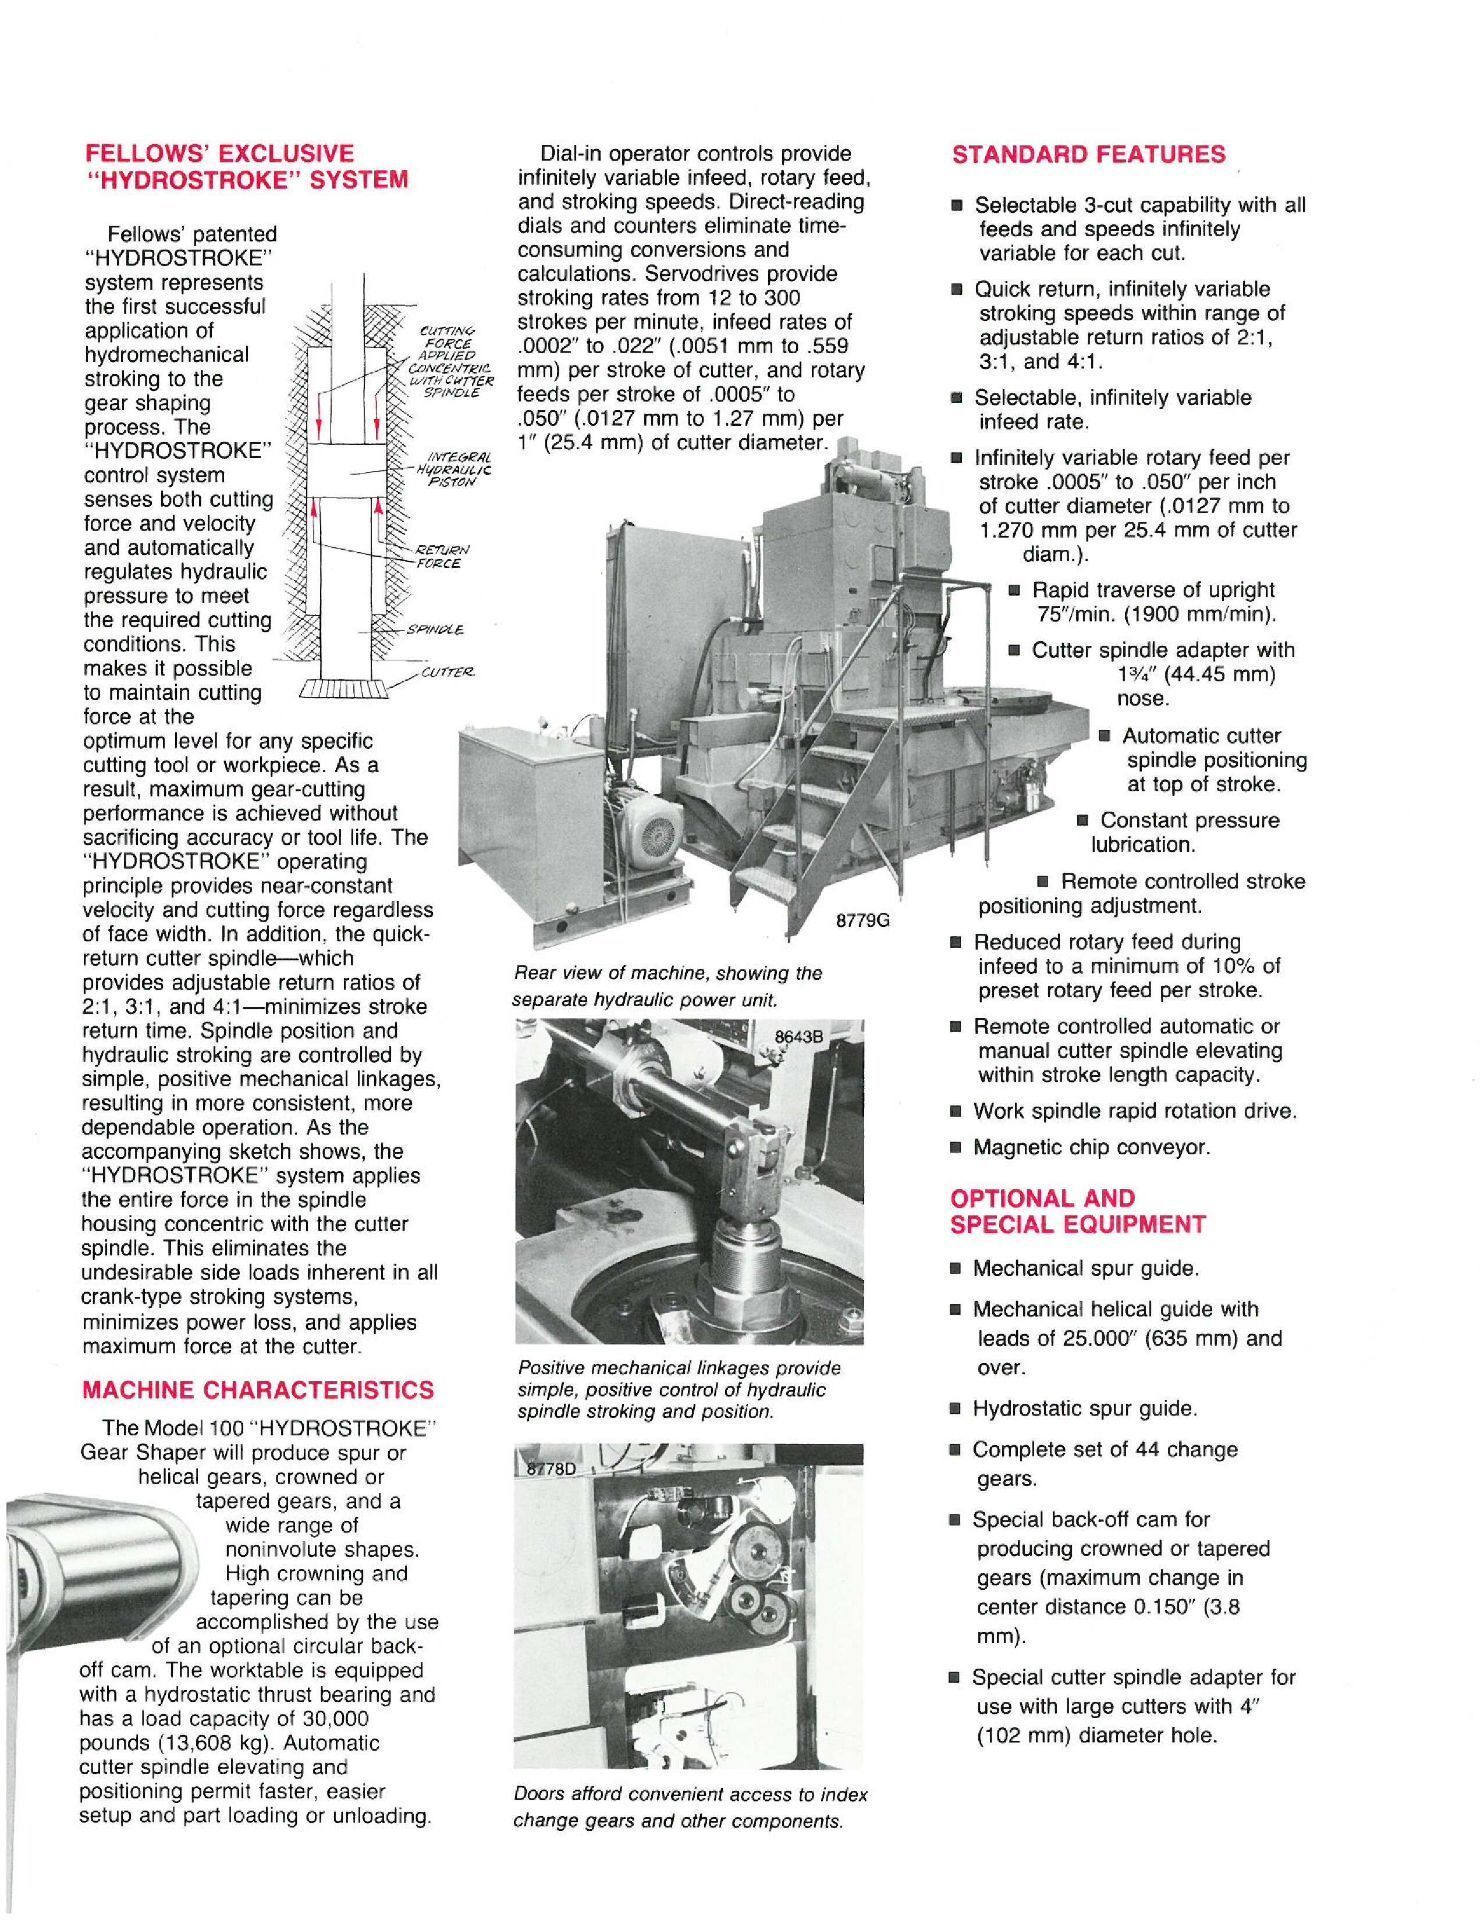 1992 FELLOWS 100-12 CNC HYDROSTROKE GEAR SHAPERS CNC | Piselli Enterprises